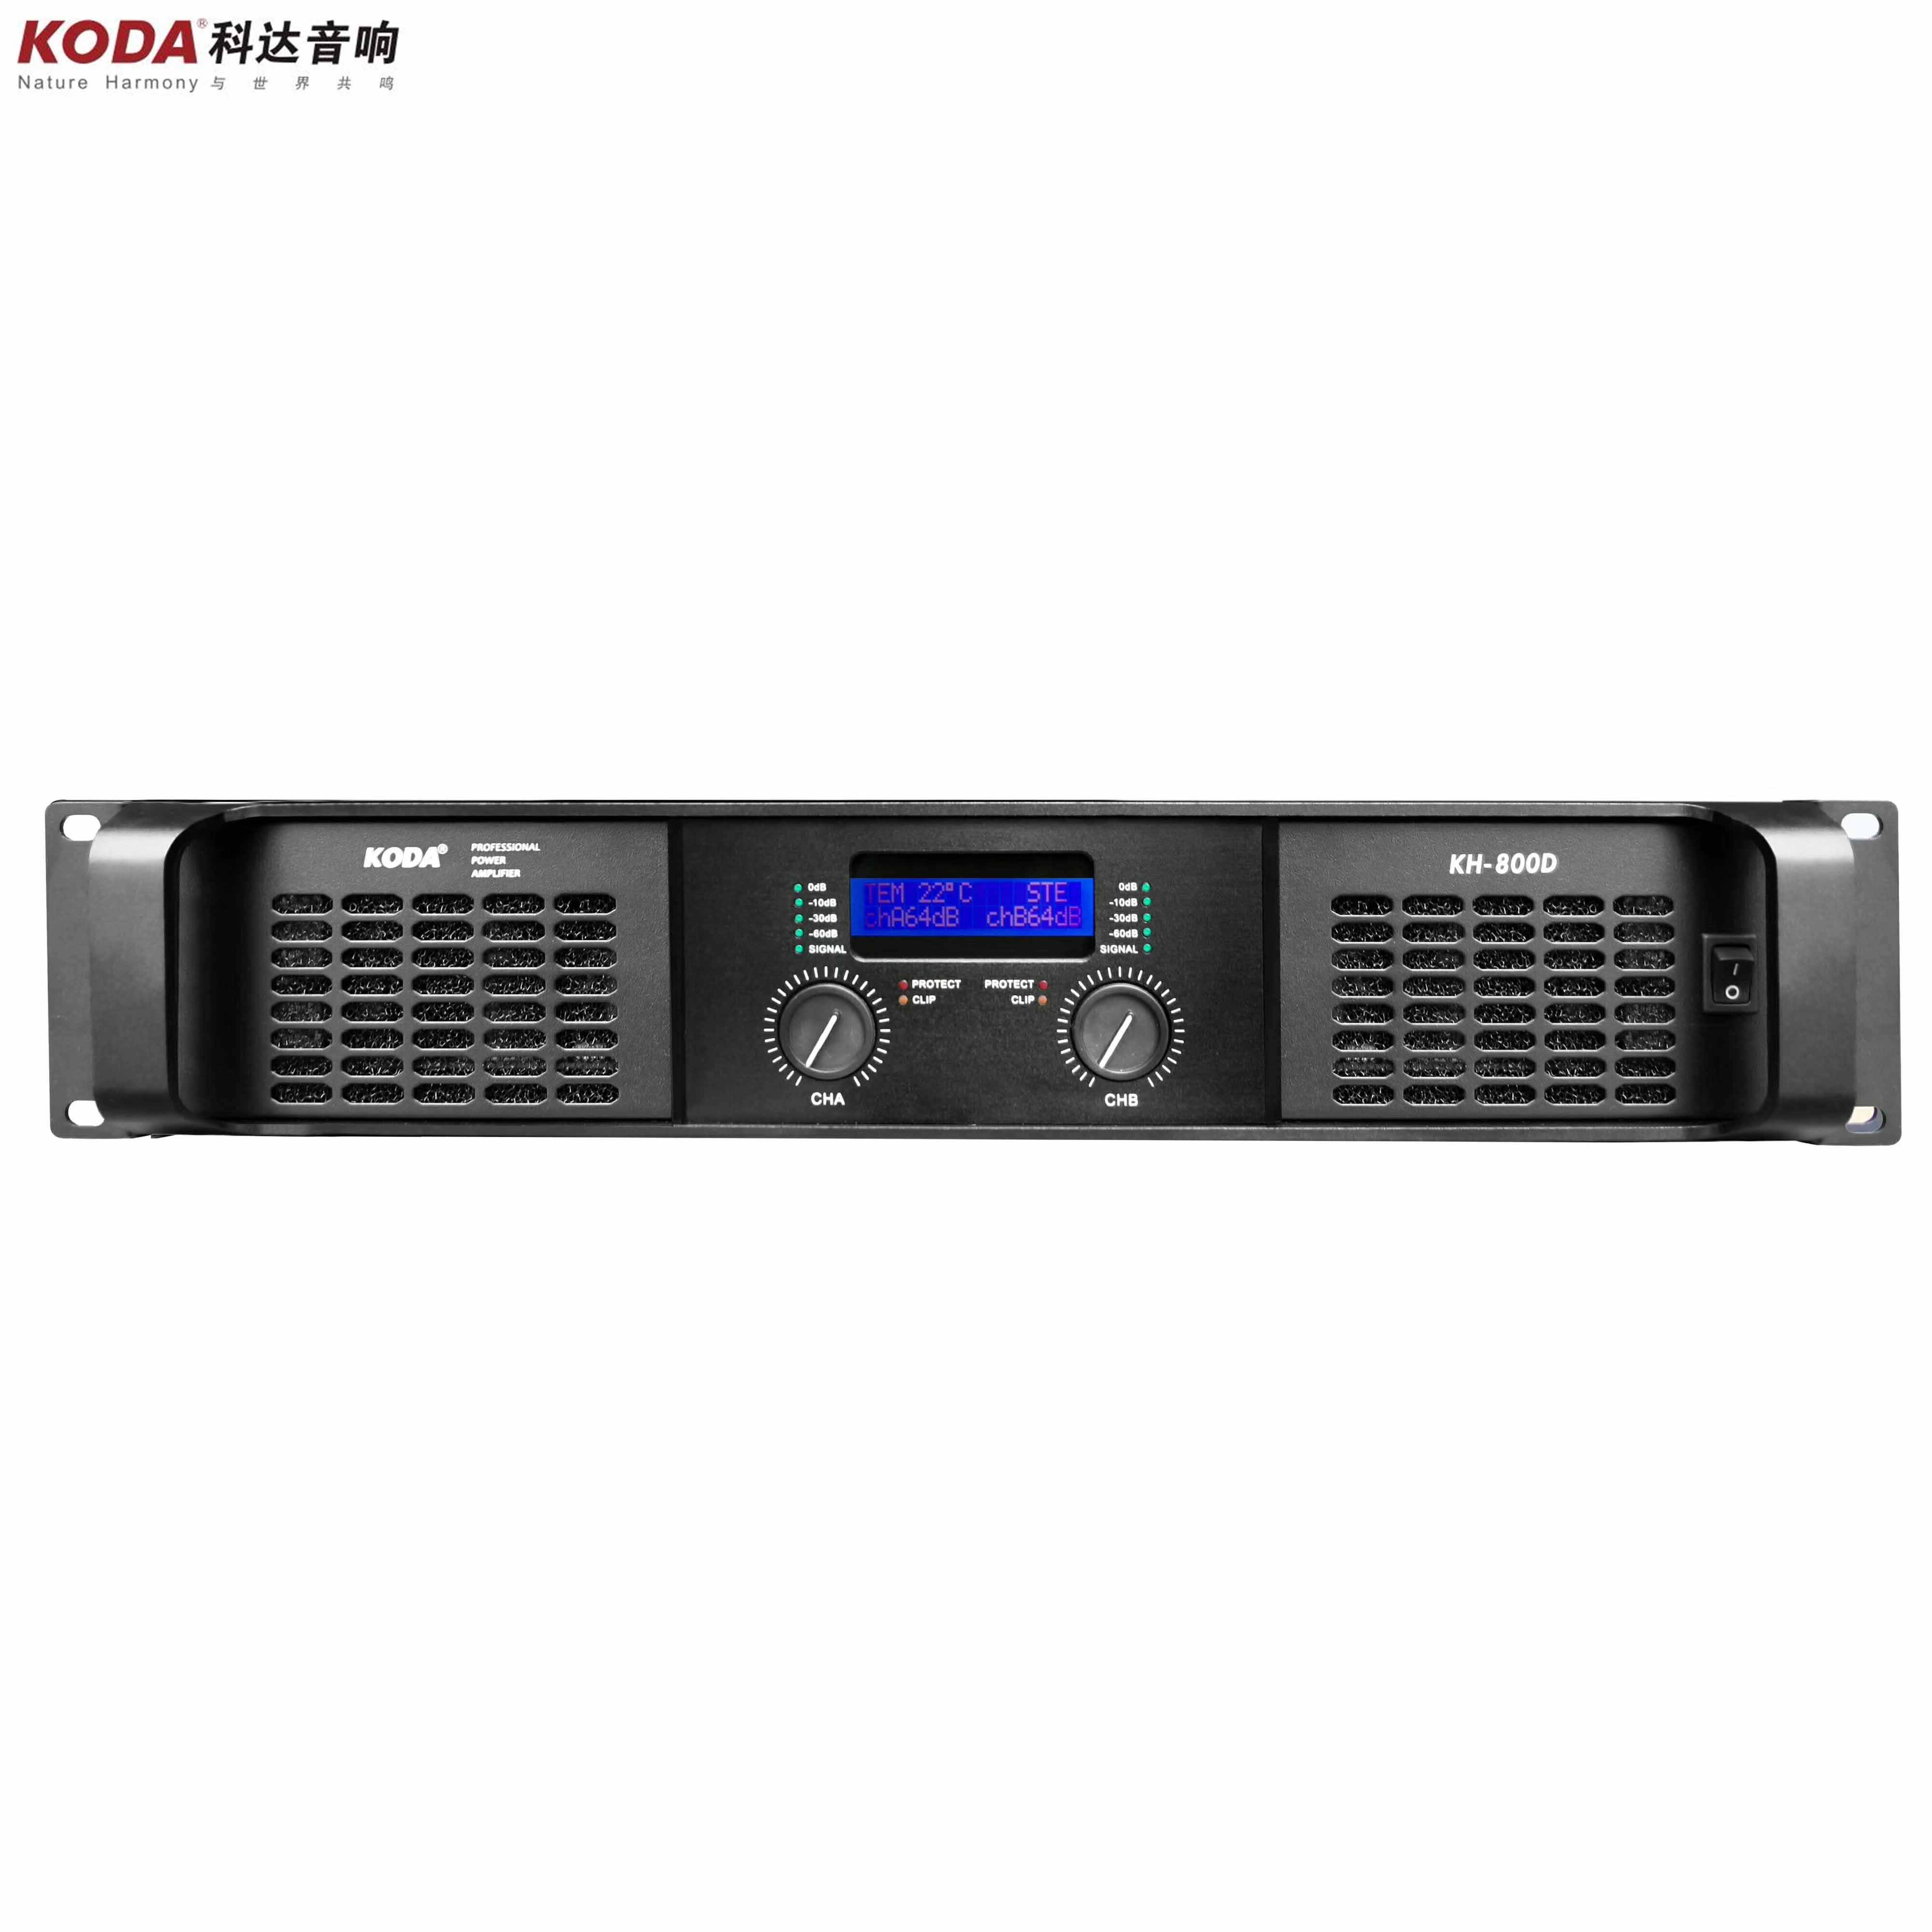 Amplifier KODA KH-1500D